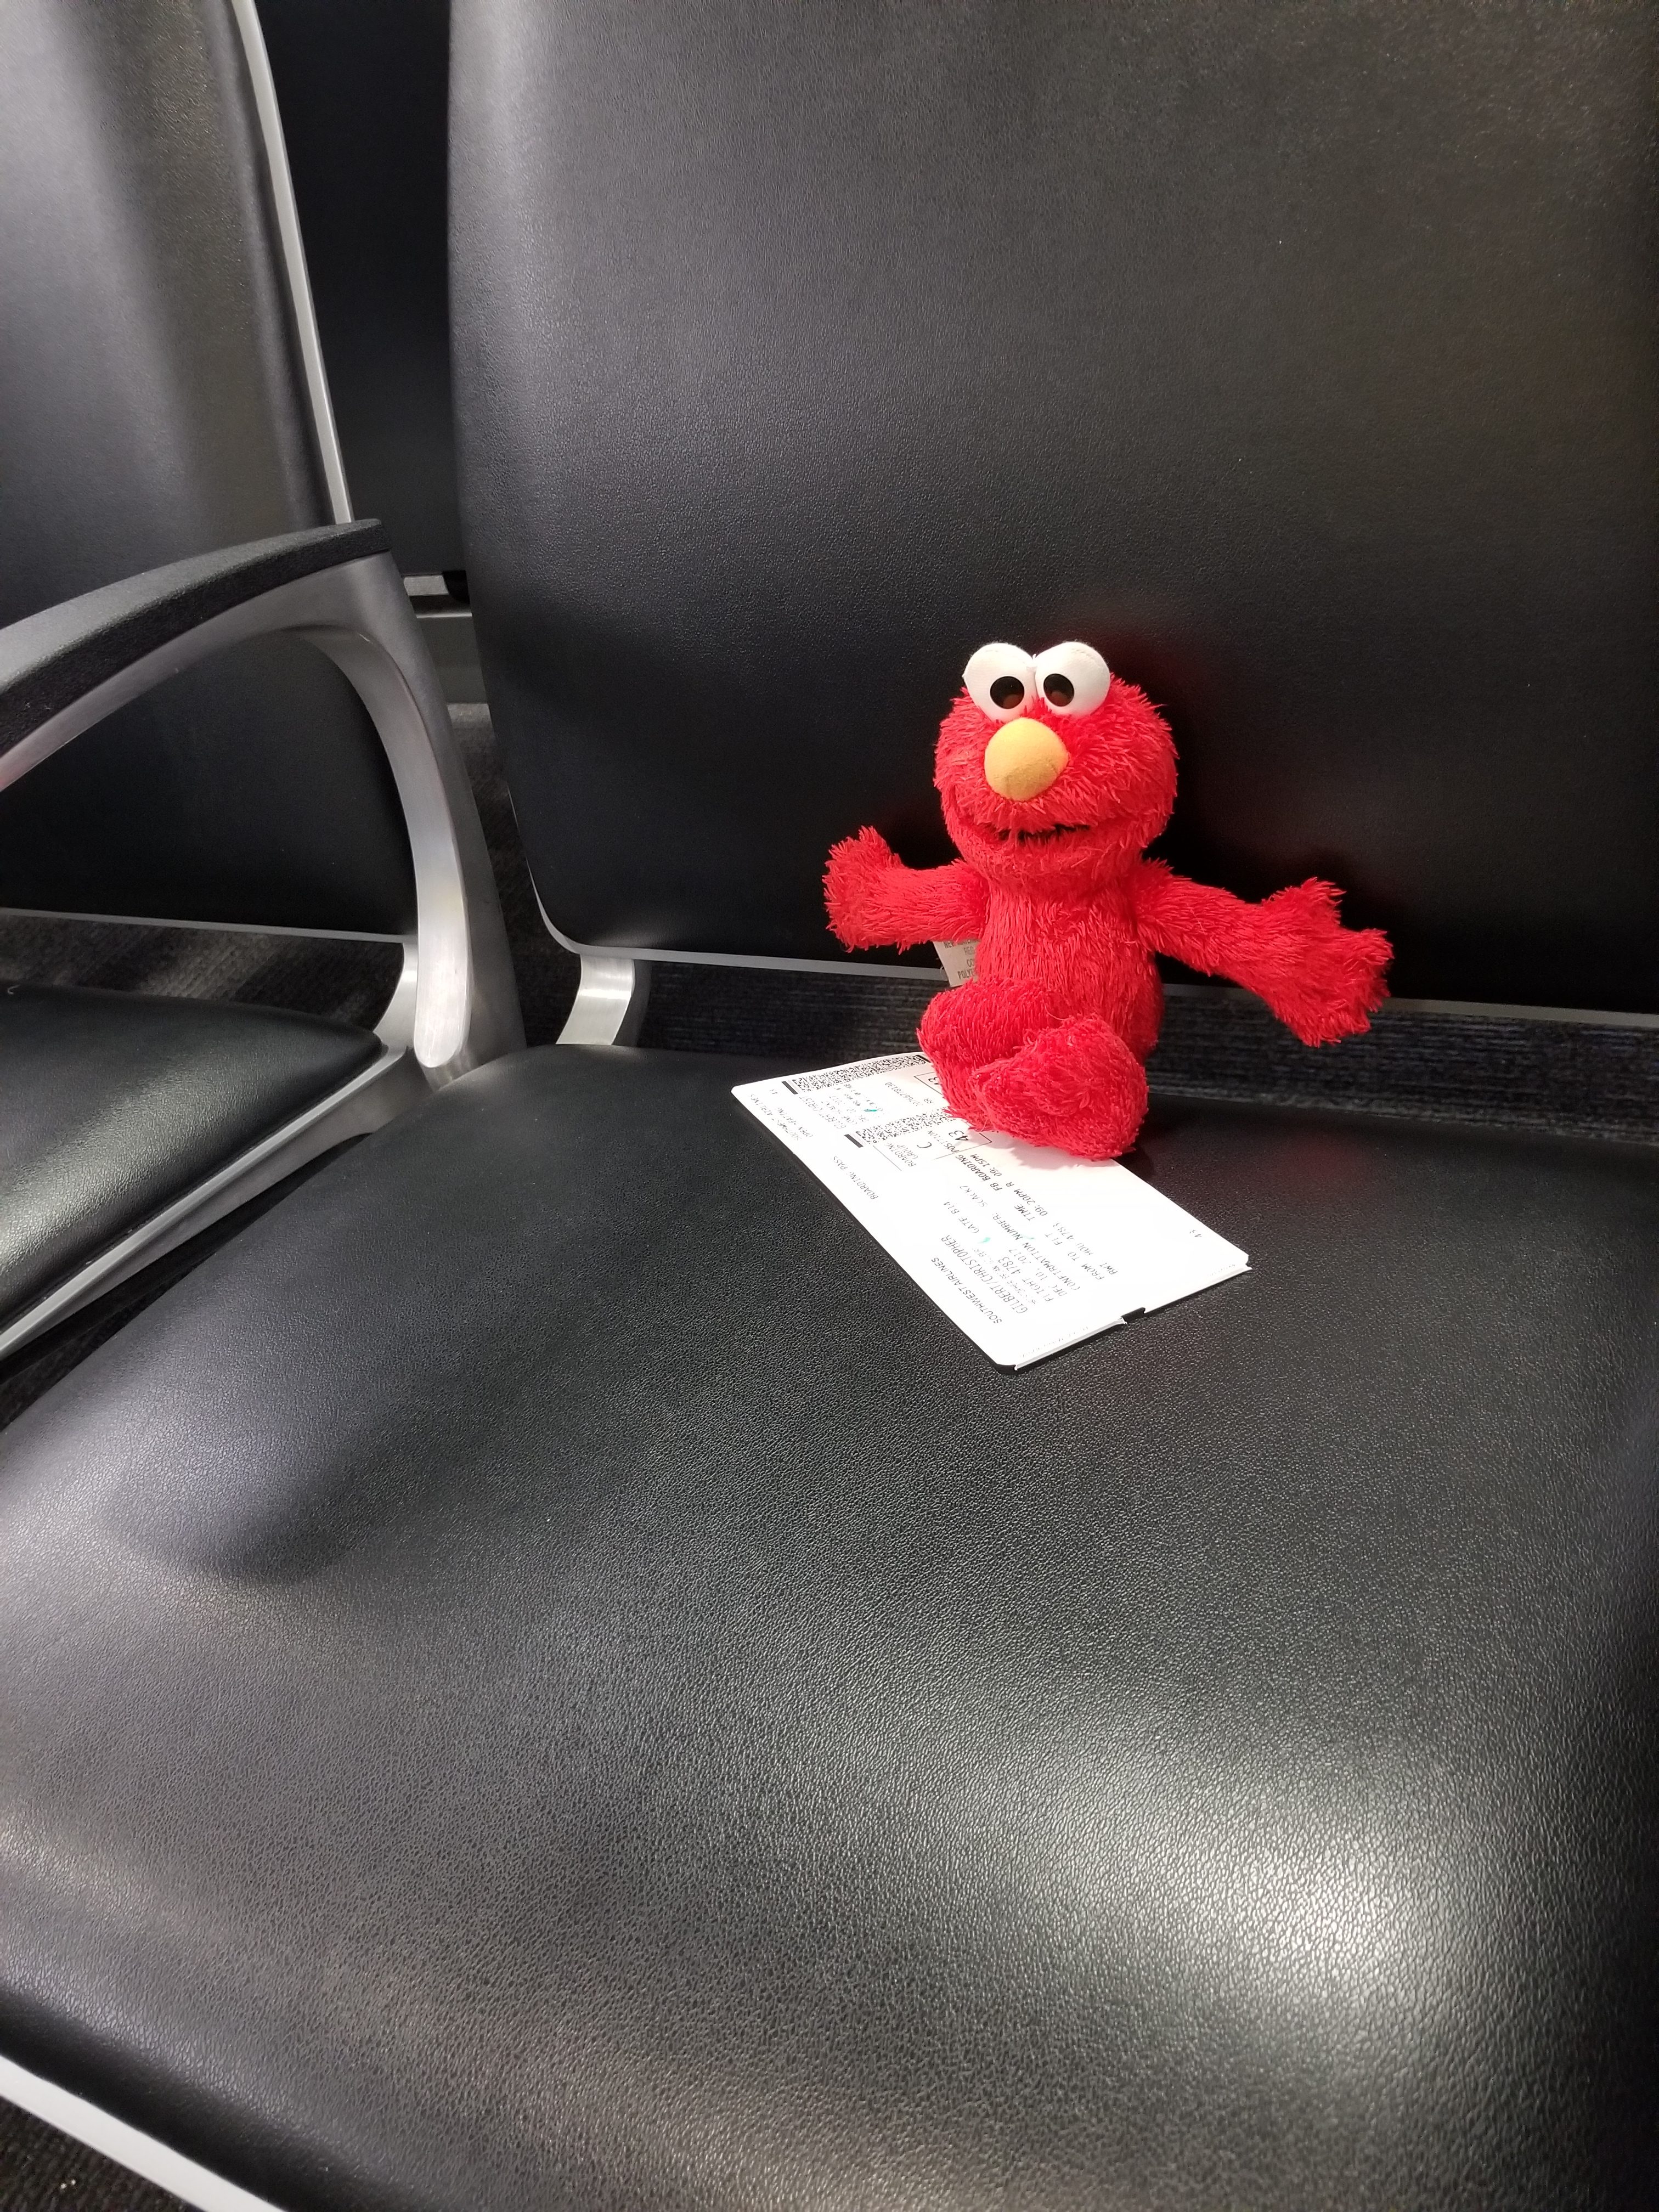 Elmo Waits to Board